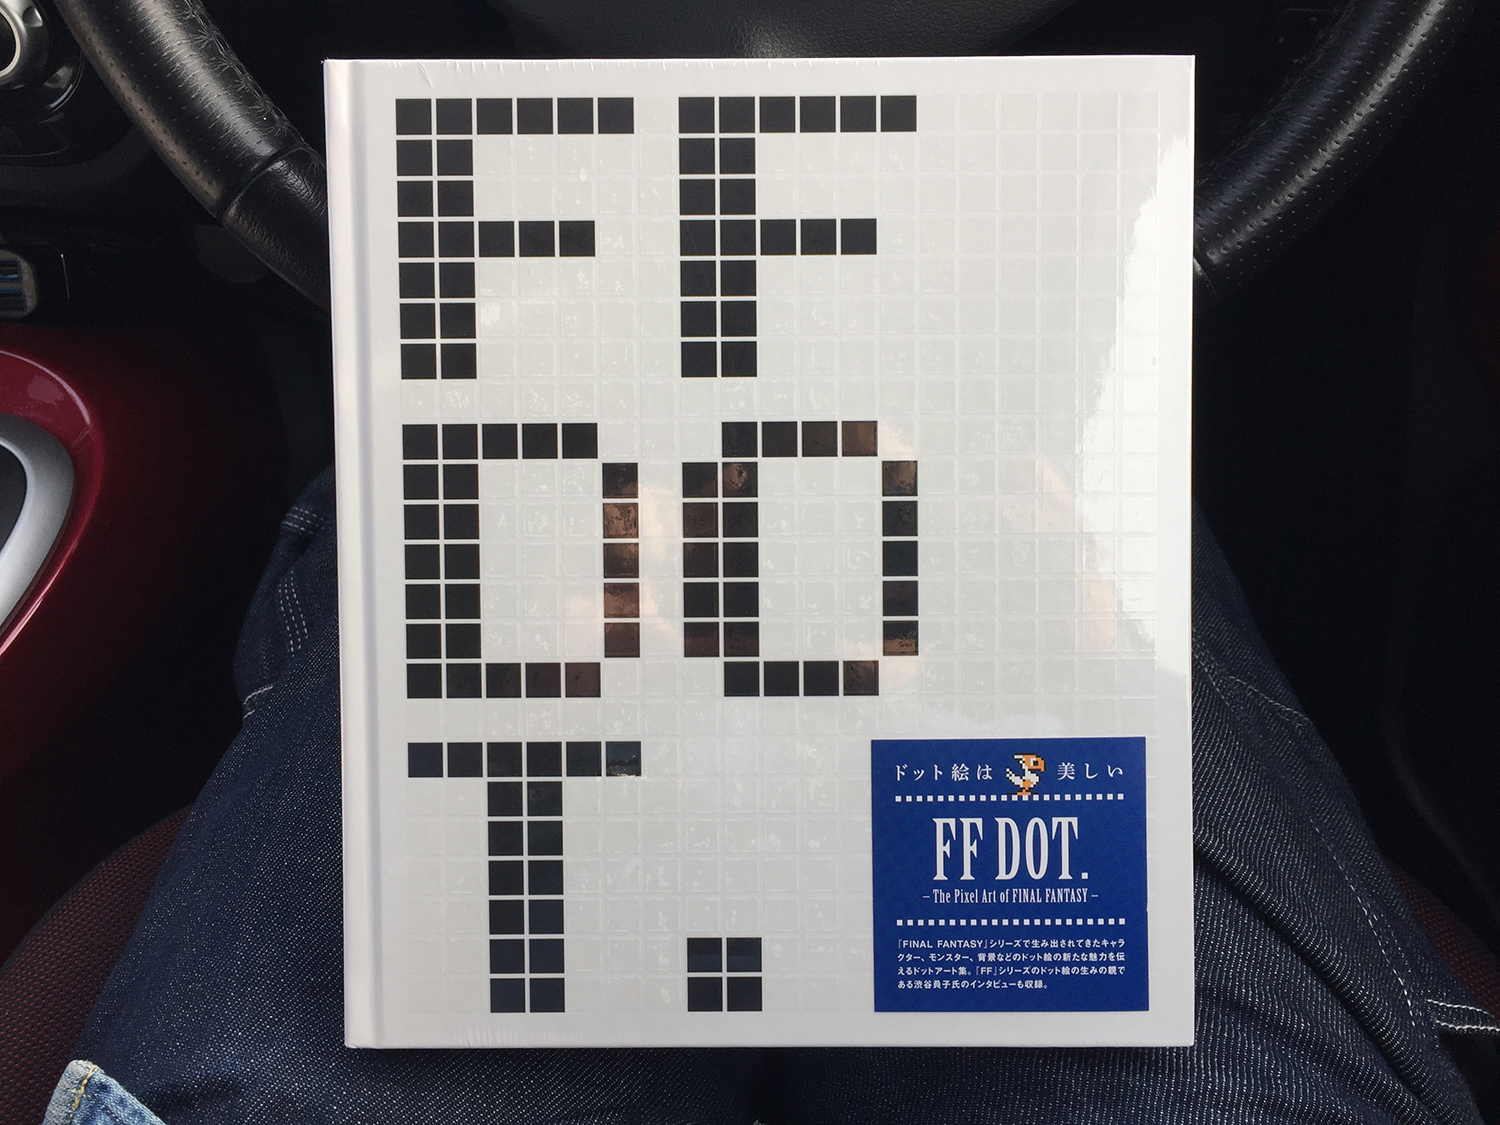 FF DOT. -The Pixel Art Of FINAL FANTASY-